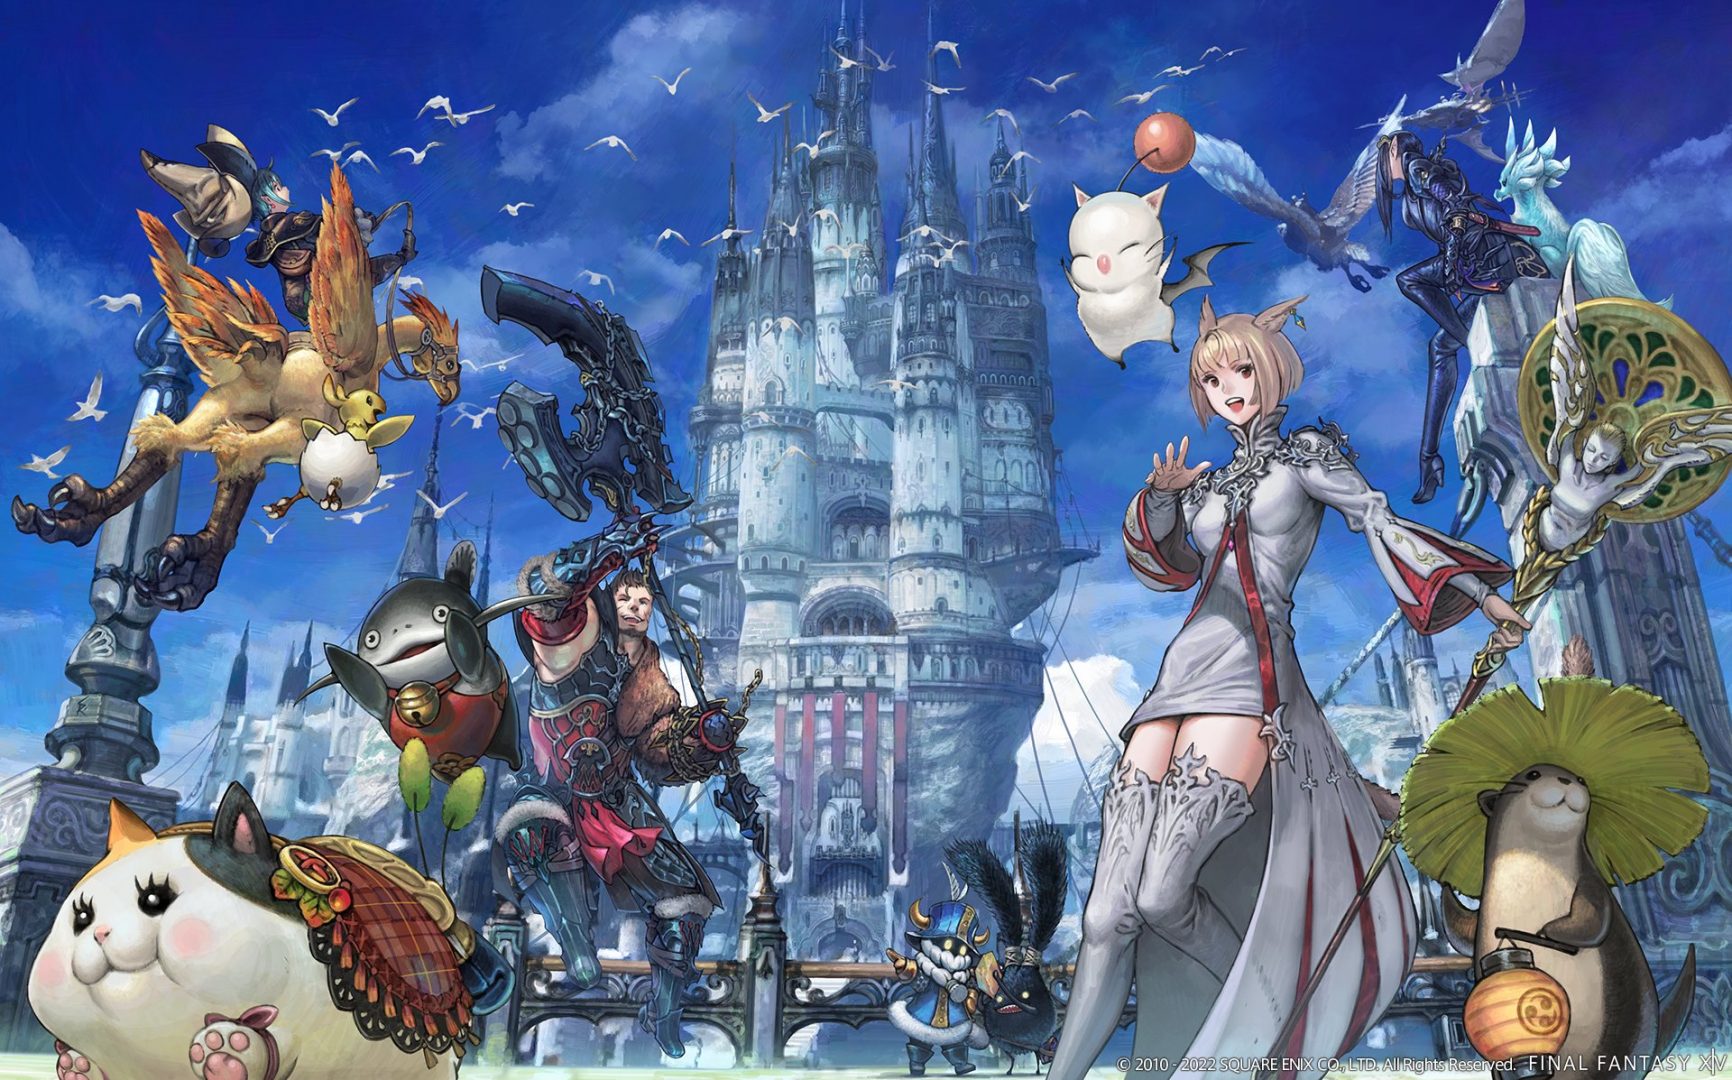 Final Fantasy XIV promotional art